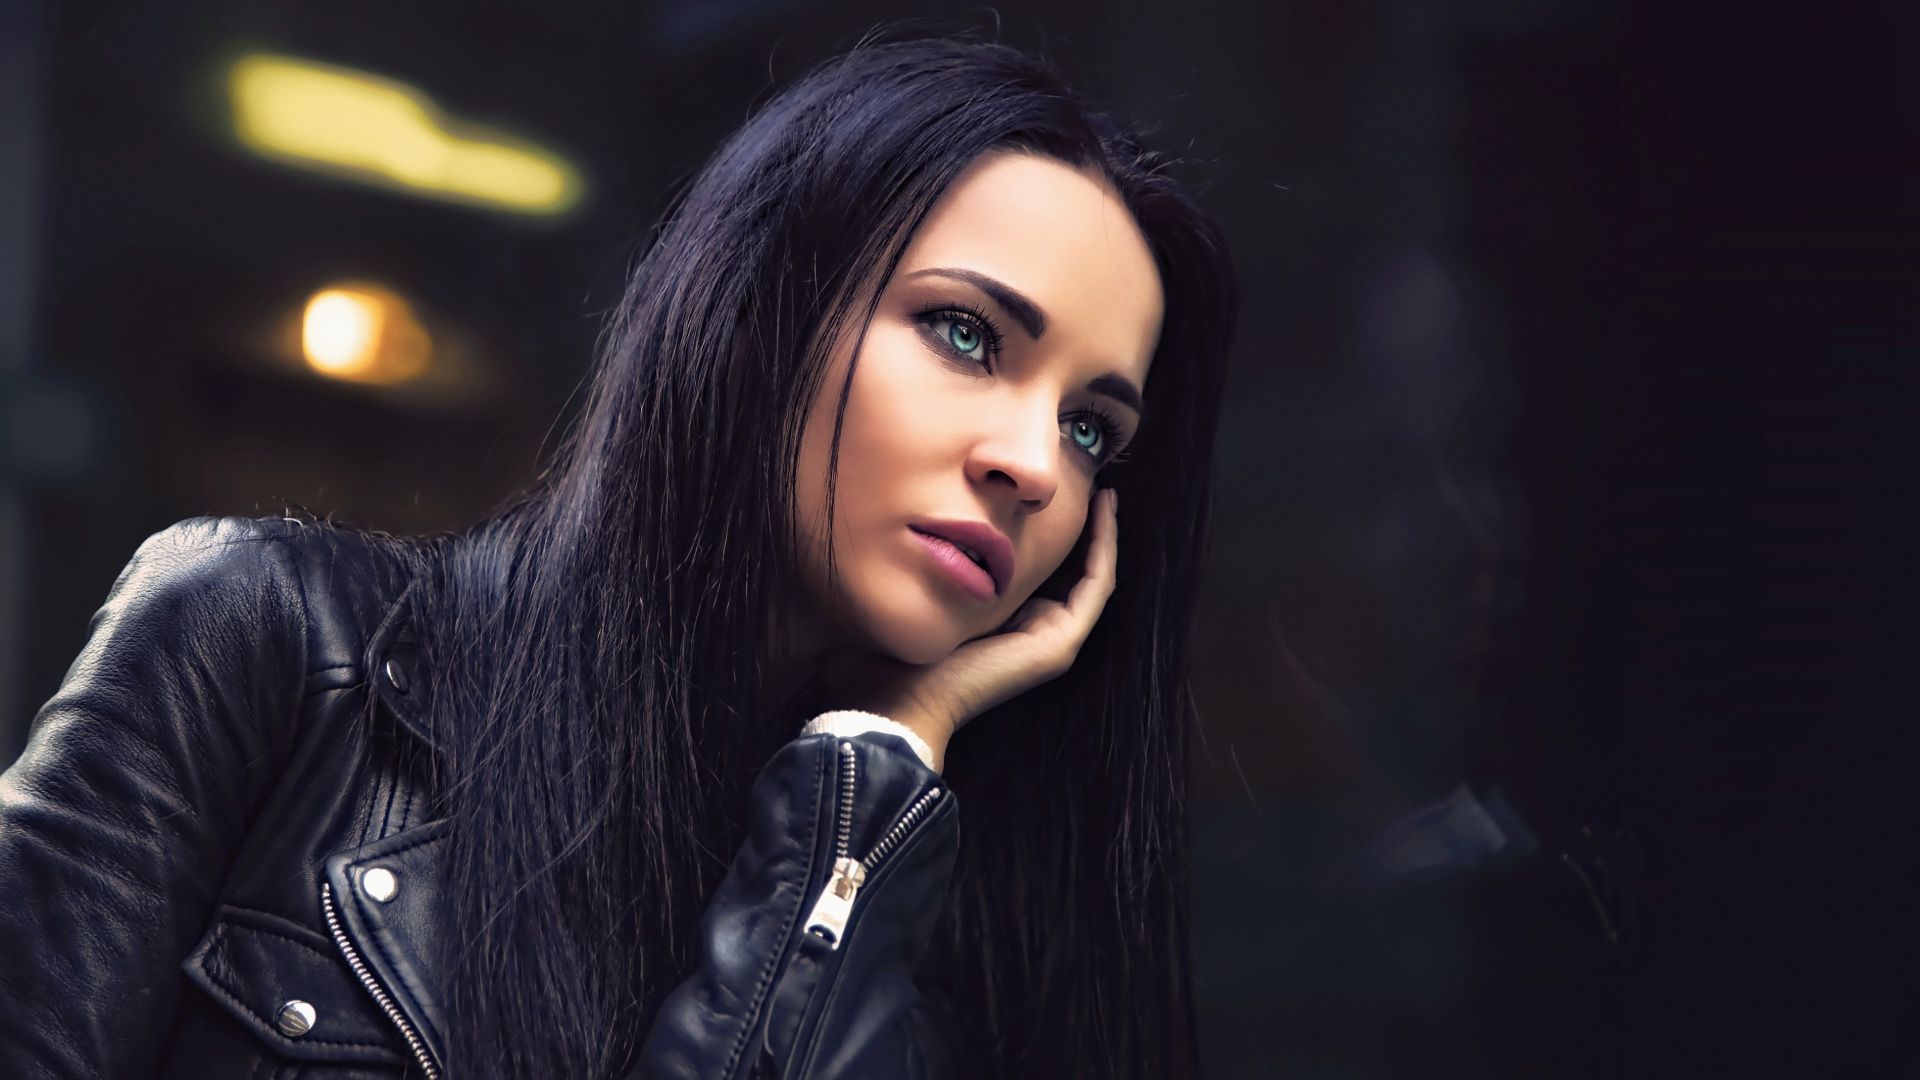 Wallpaper Angelina petrova, girl model, leather jacket, 4k